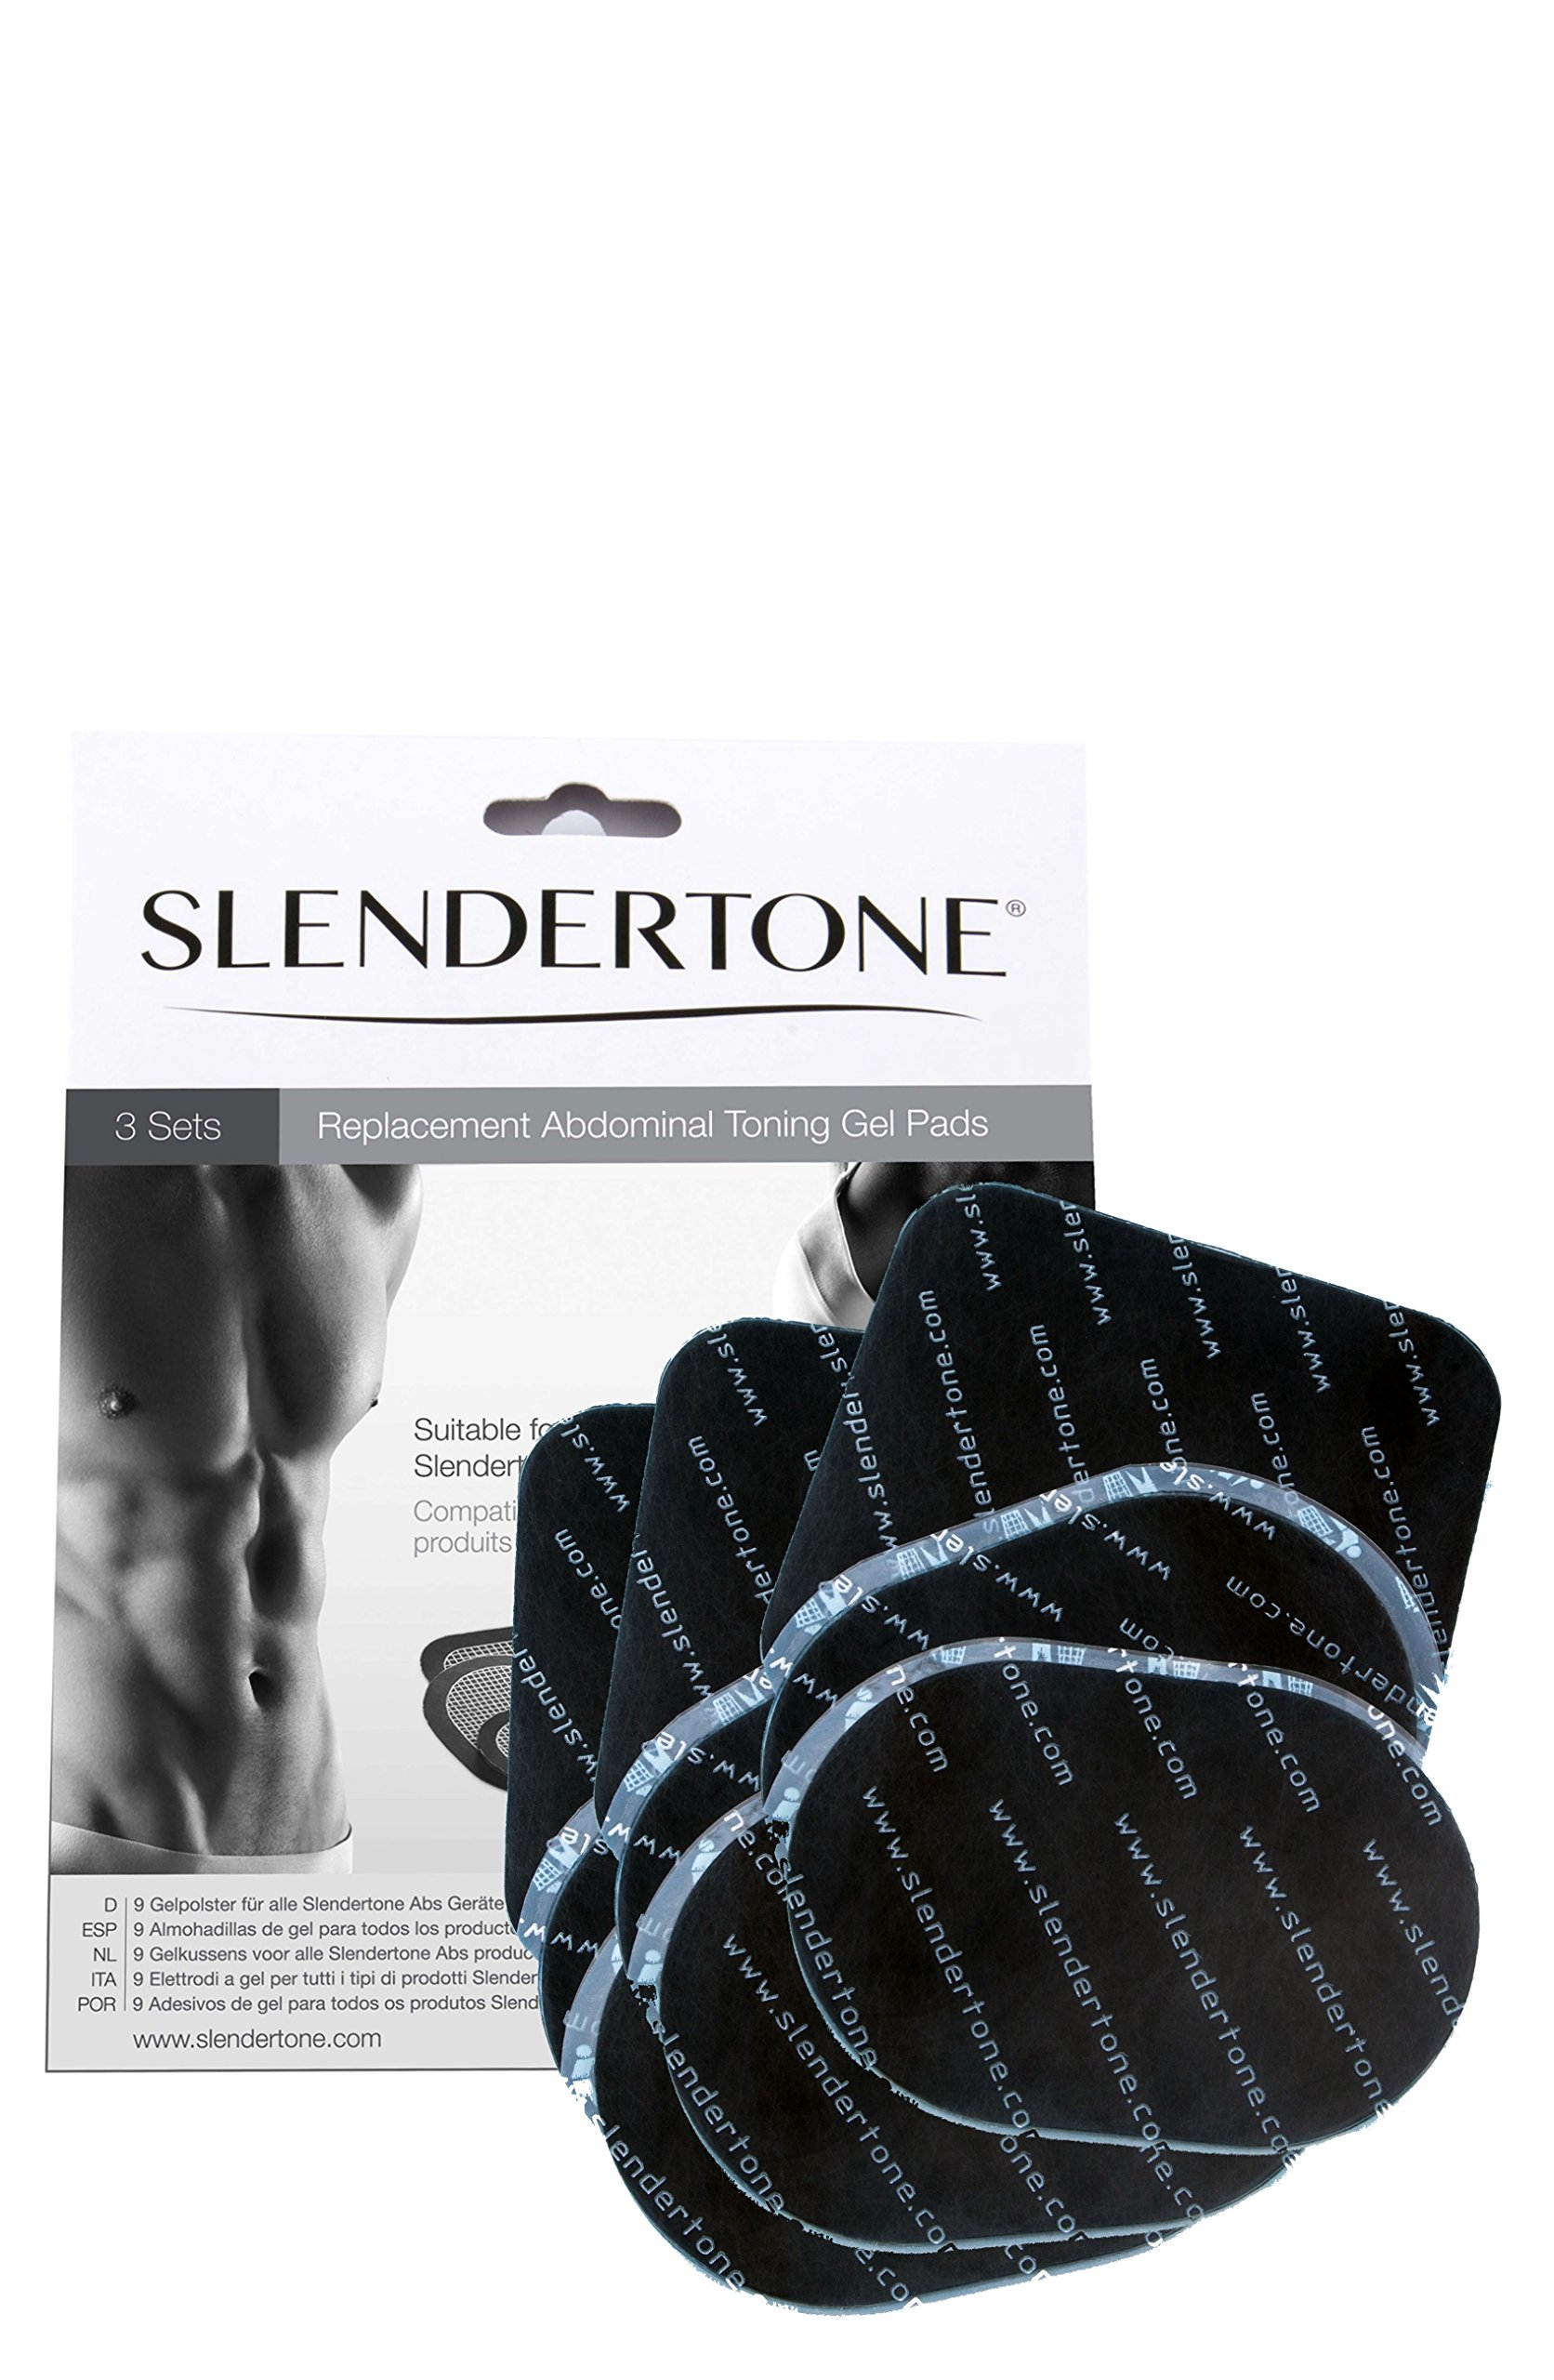 SLENDERTONE Abdominal Toning GEL PADS 1 Set of 3 Pads - All Slendertone Ab  Belts